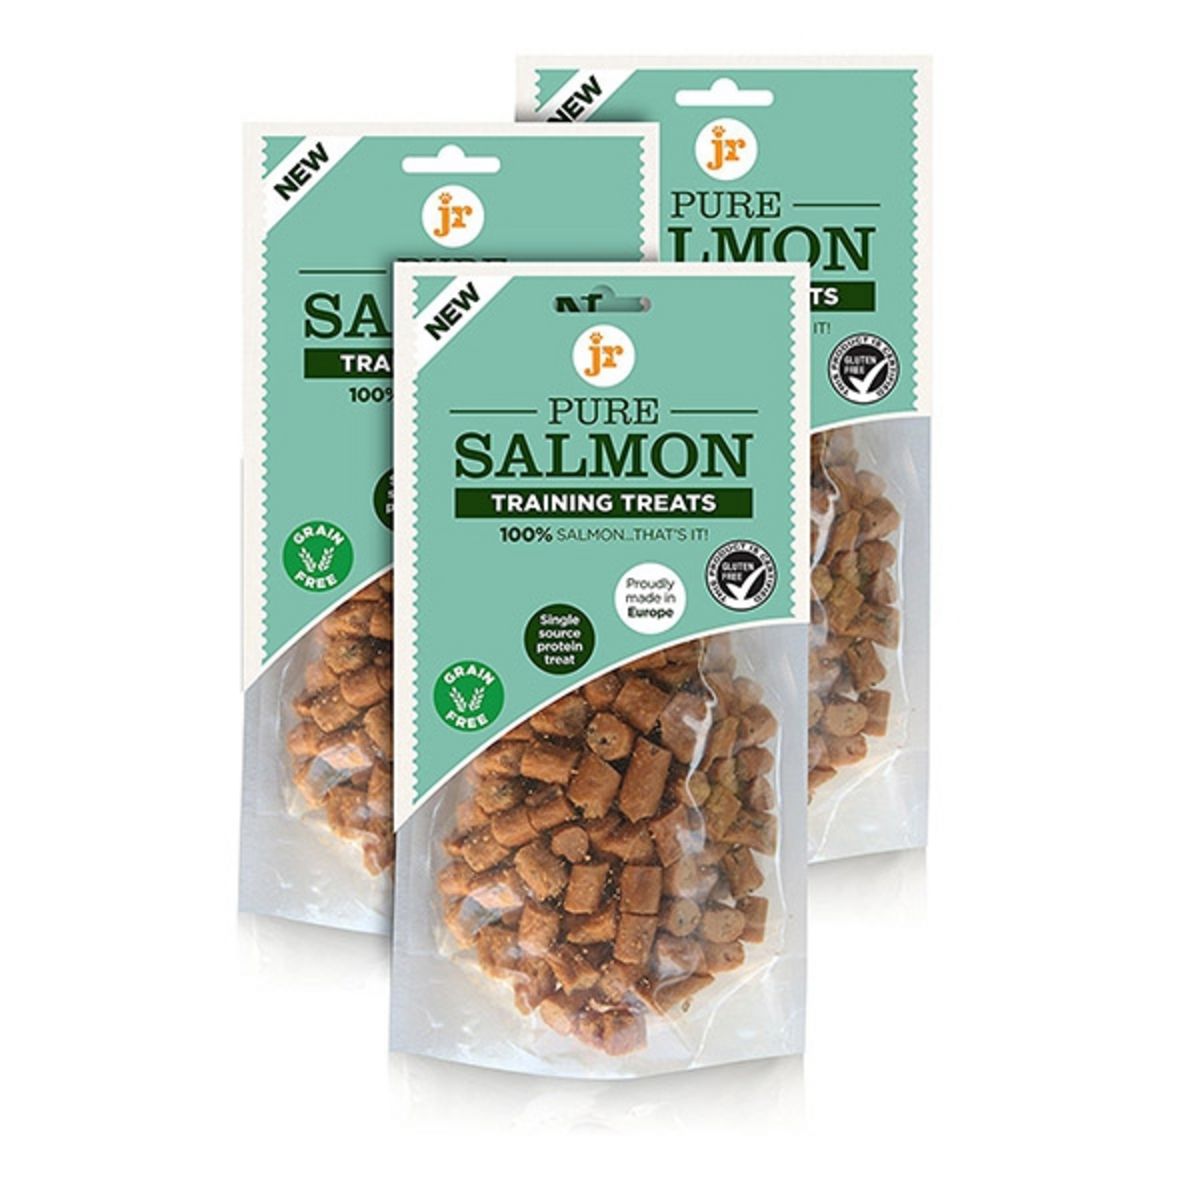 JR Pet Products - Pure Salmon Training Treats